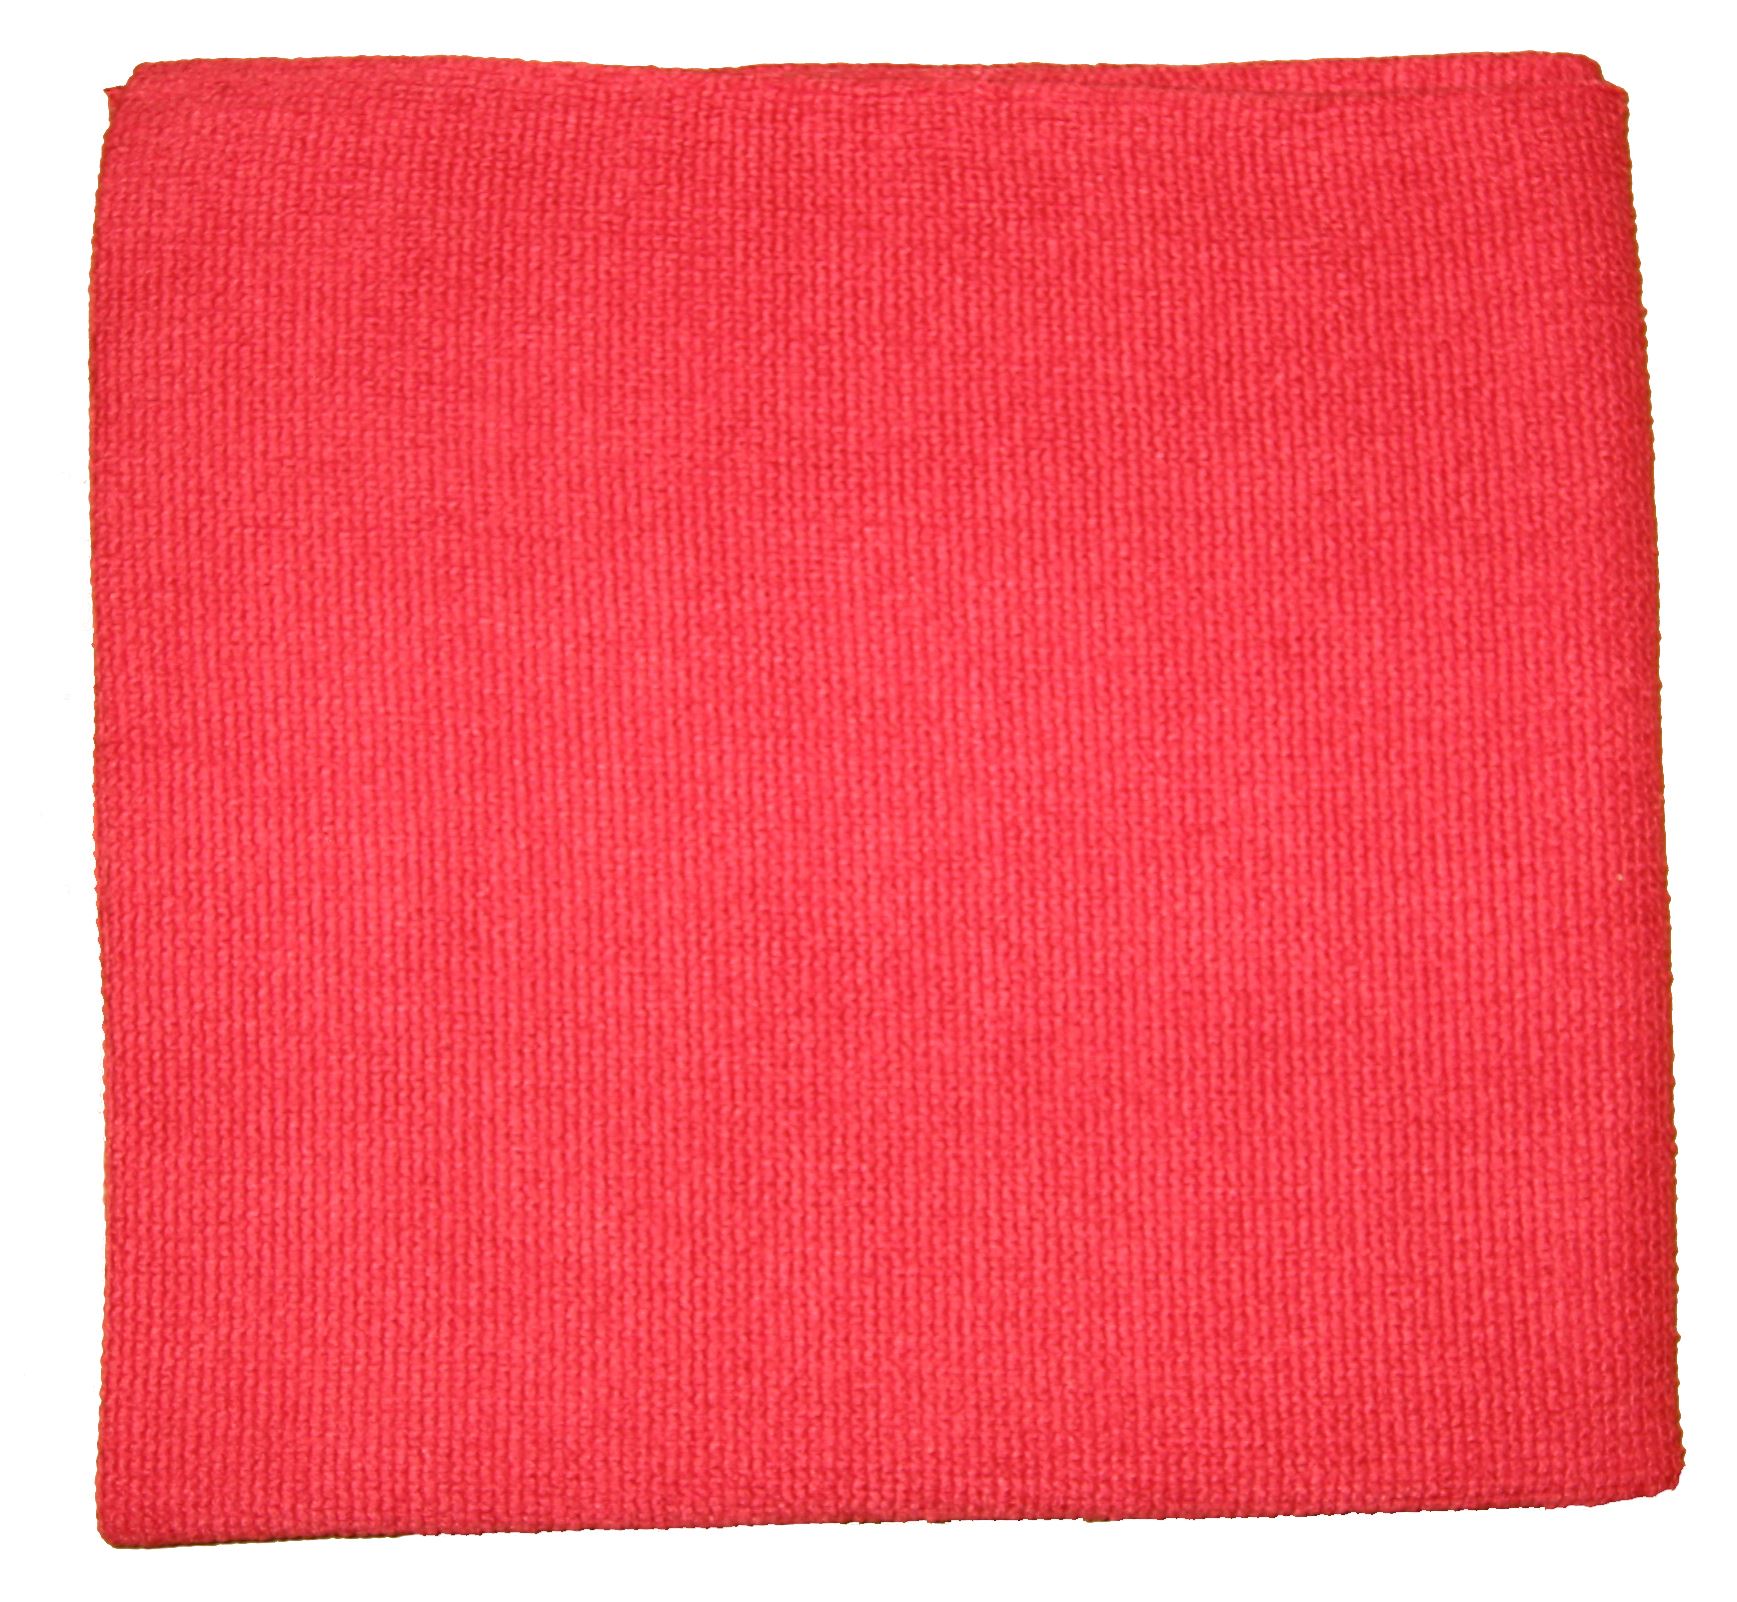 Laser microfiber cloth 40x40 cm red special bodywork